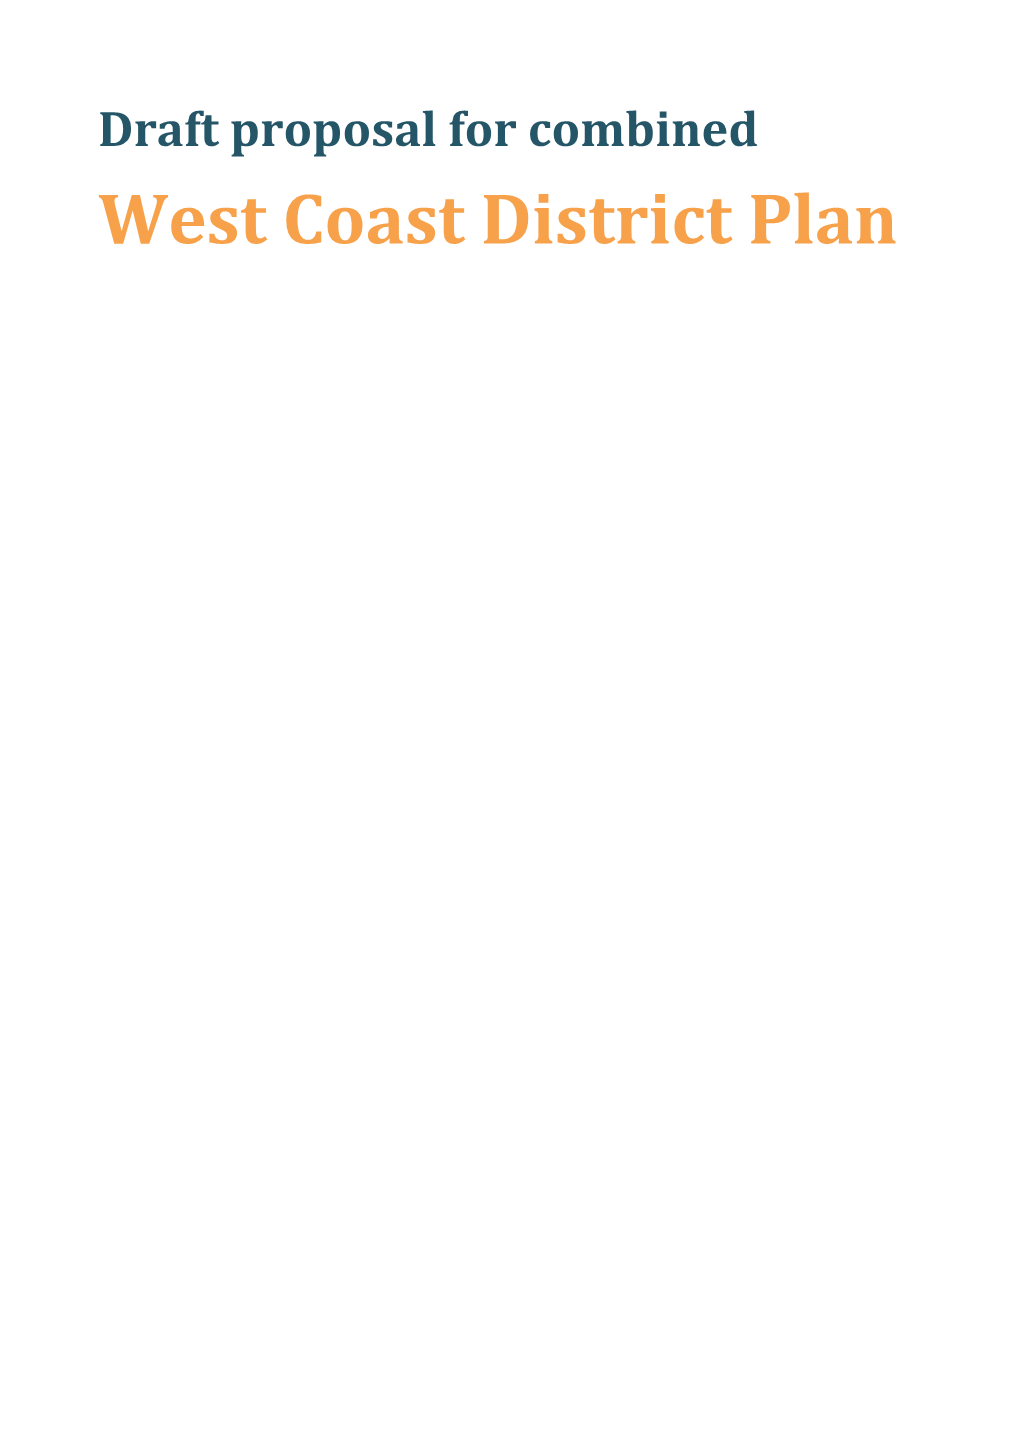 West Coast Combined Plan Brochure 9.0